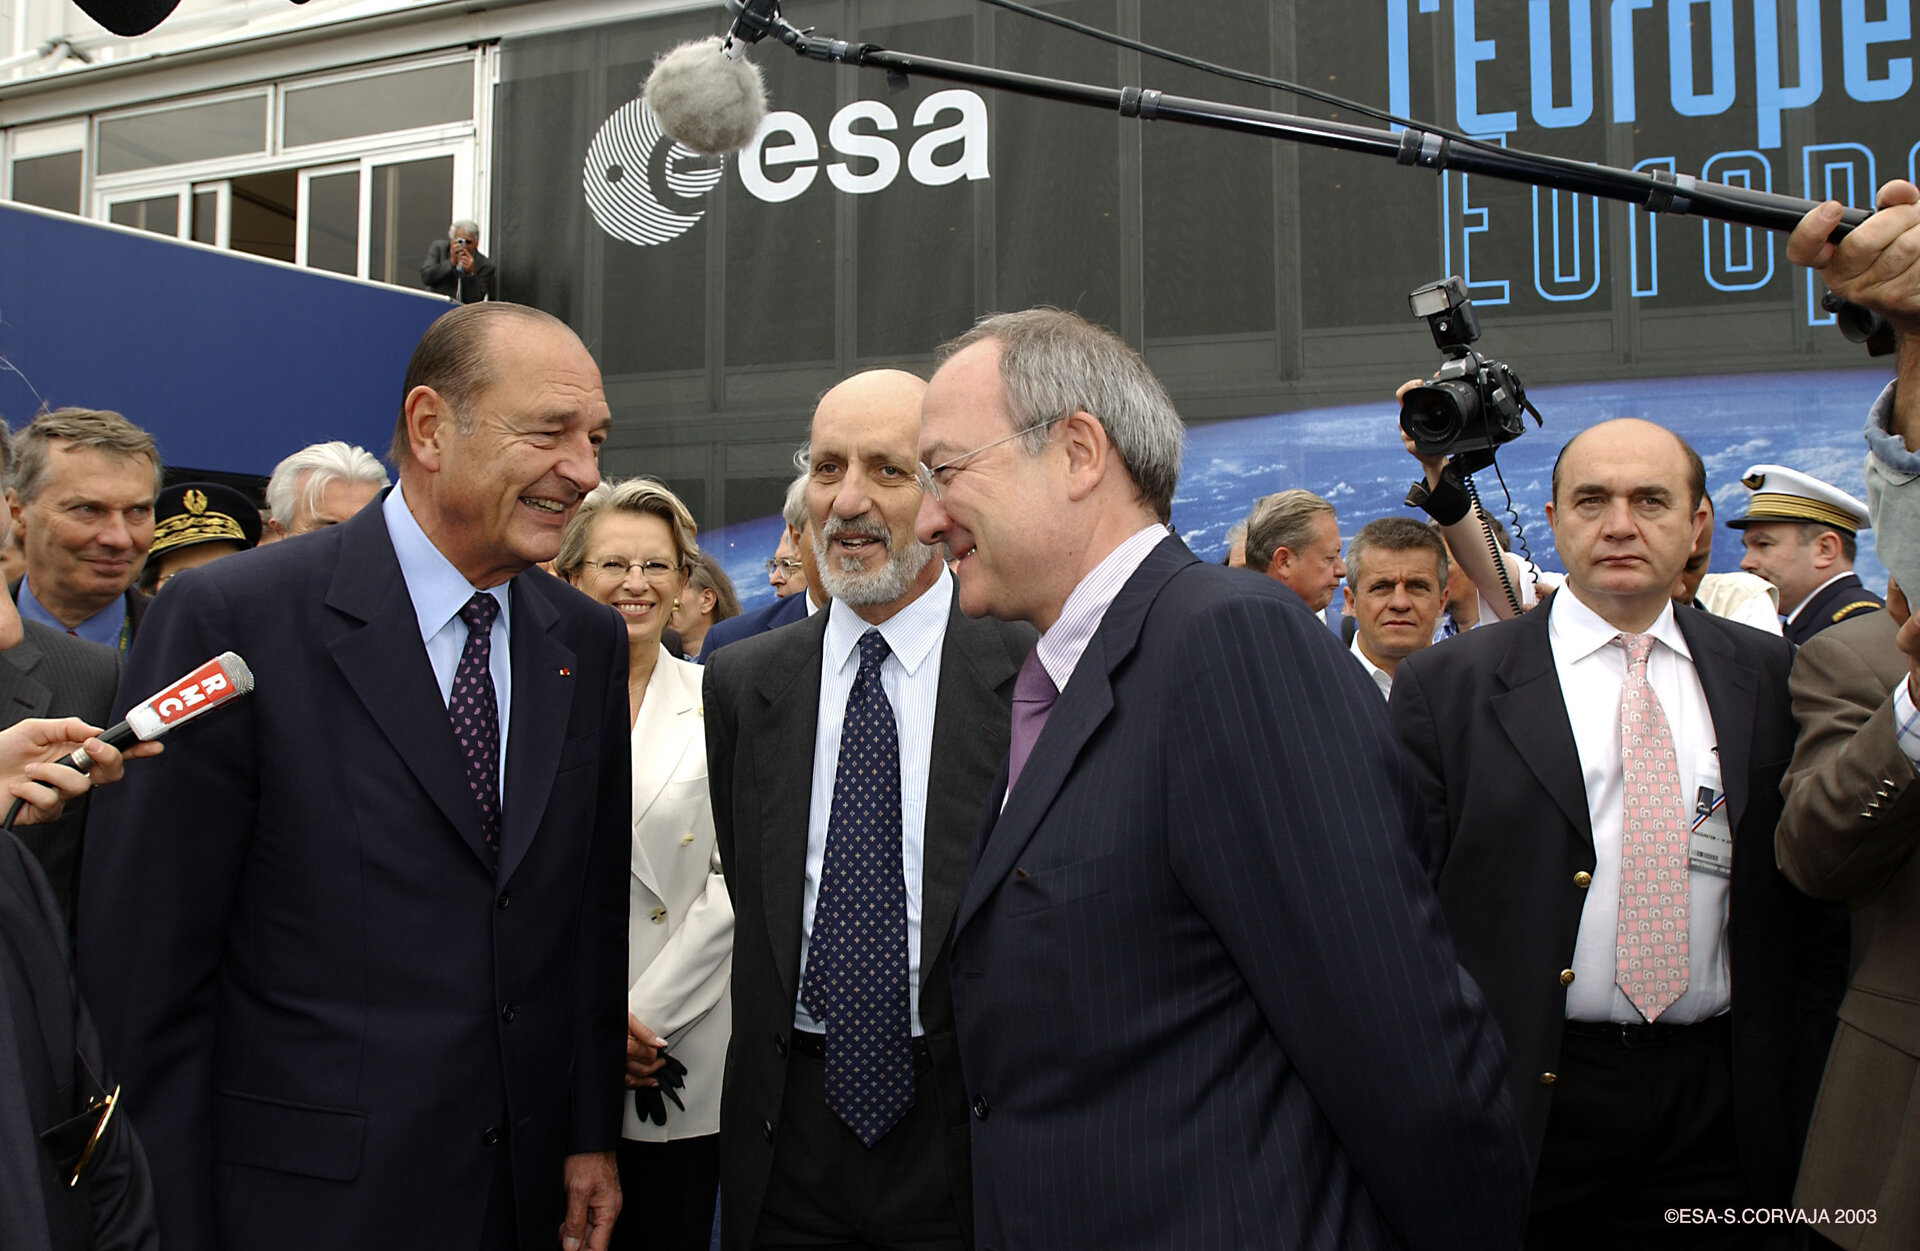 O presidente francês Chirac visita o pavilhão da ESA